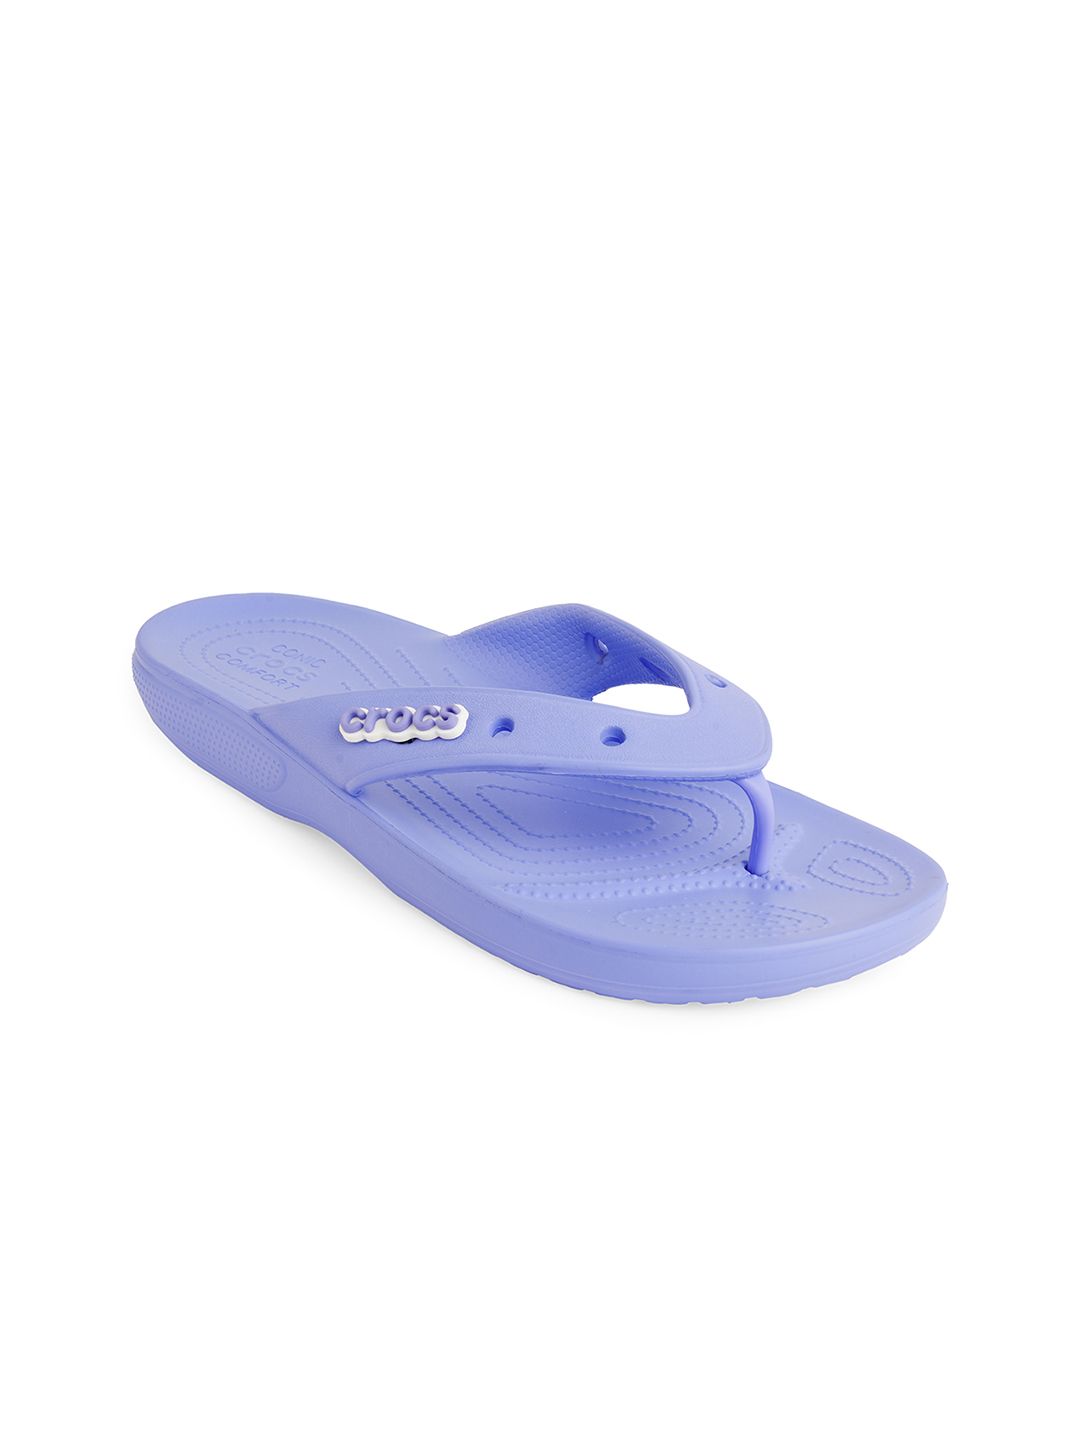 Crocs Unisex Purple Croslite Thong Flip-Flops Price in India